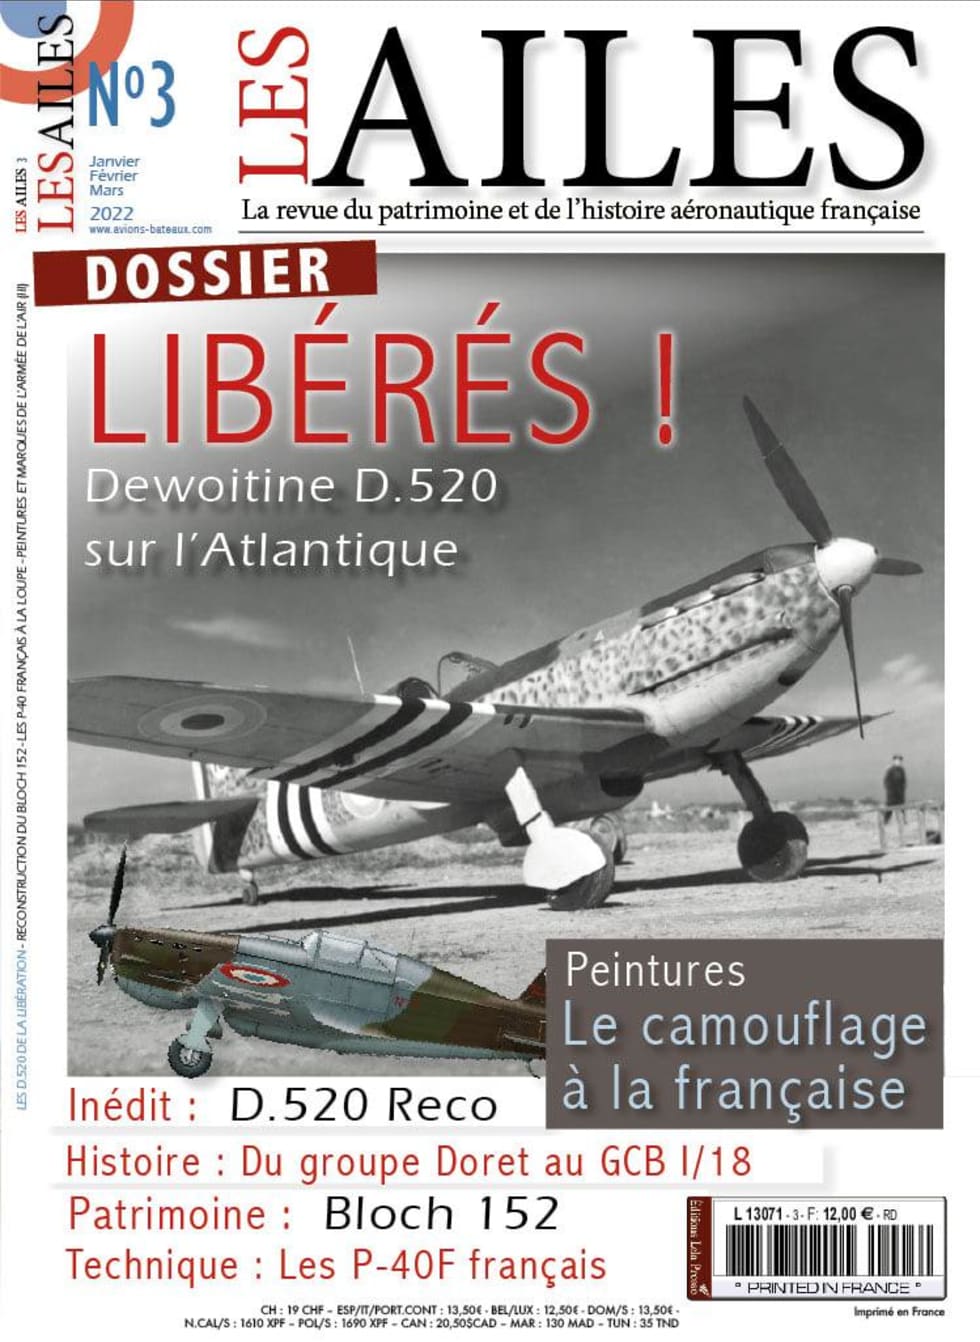 Magazine. “Les Ailes”, issue 3